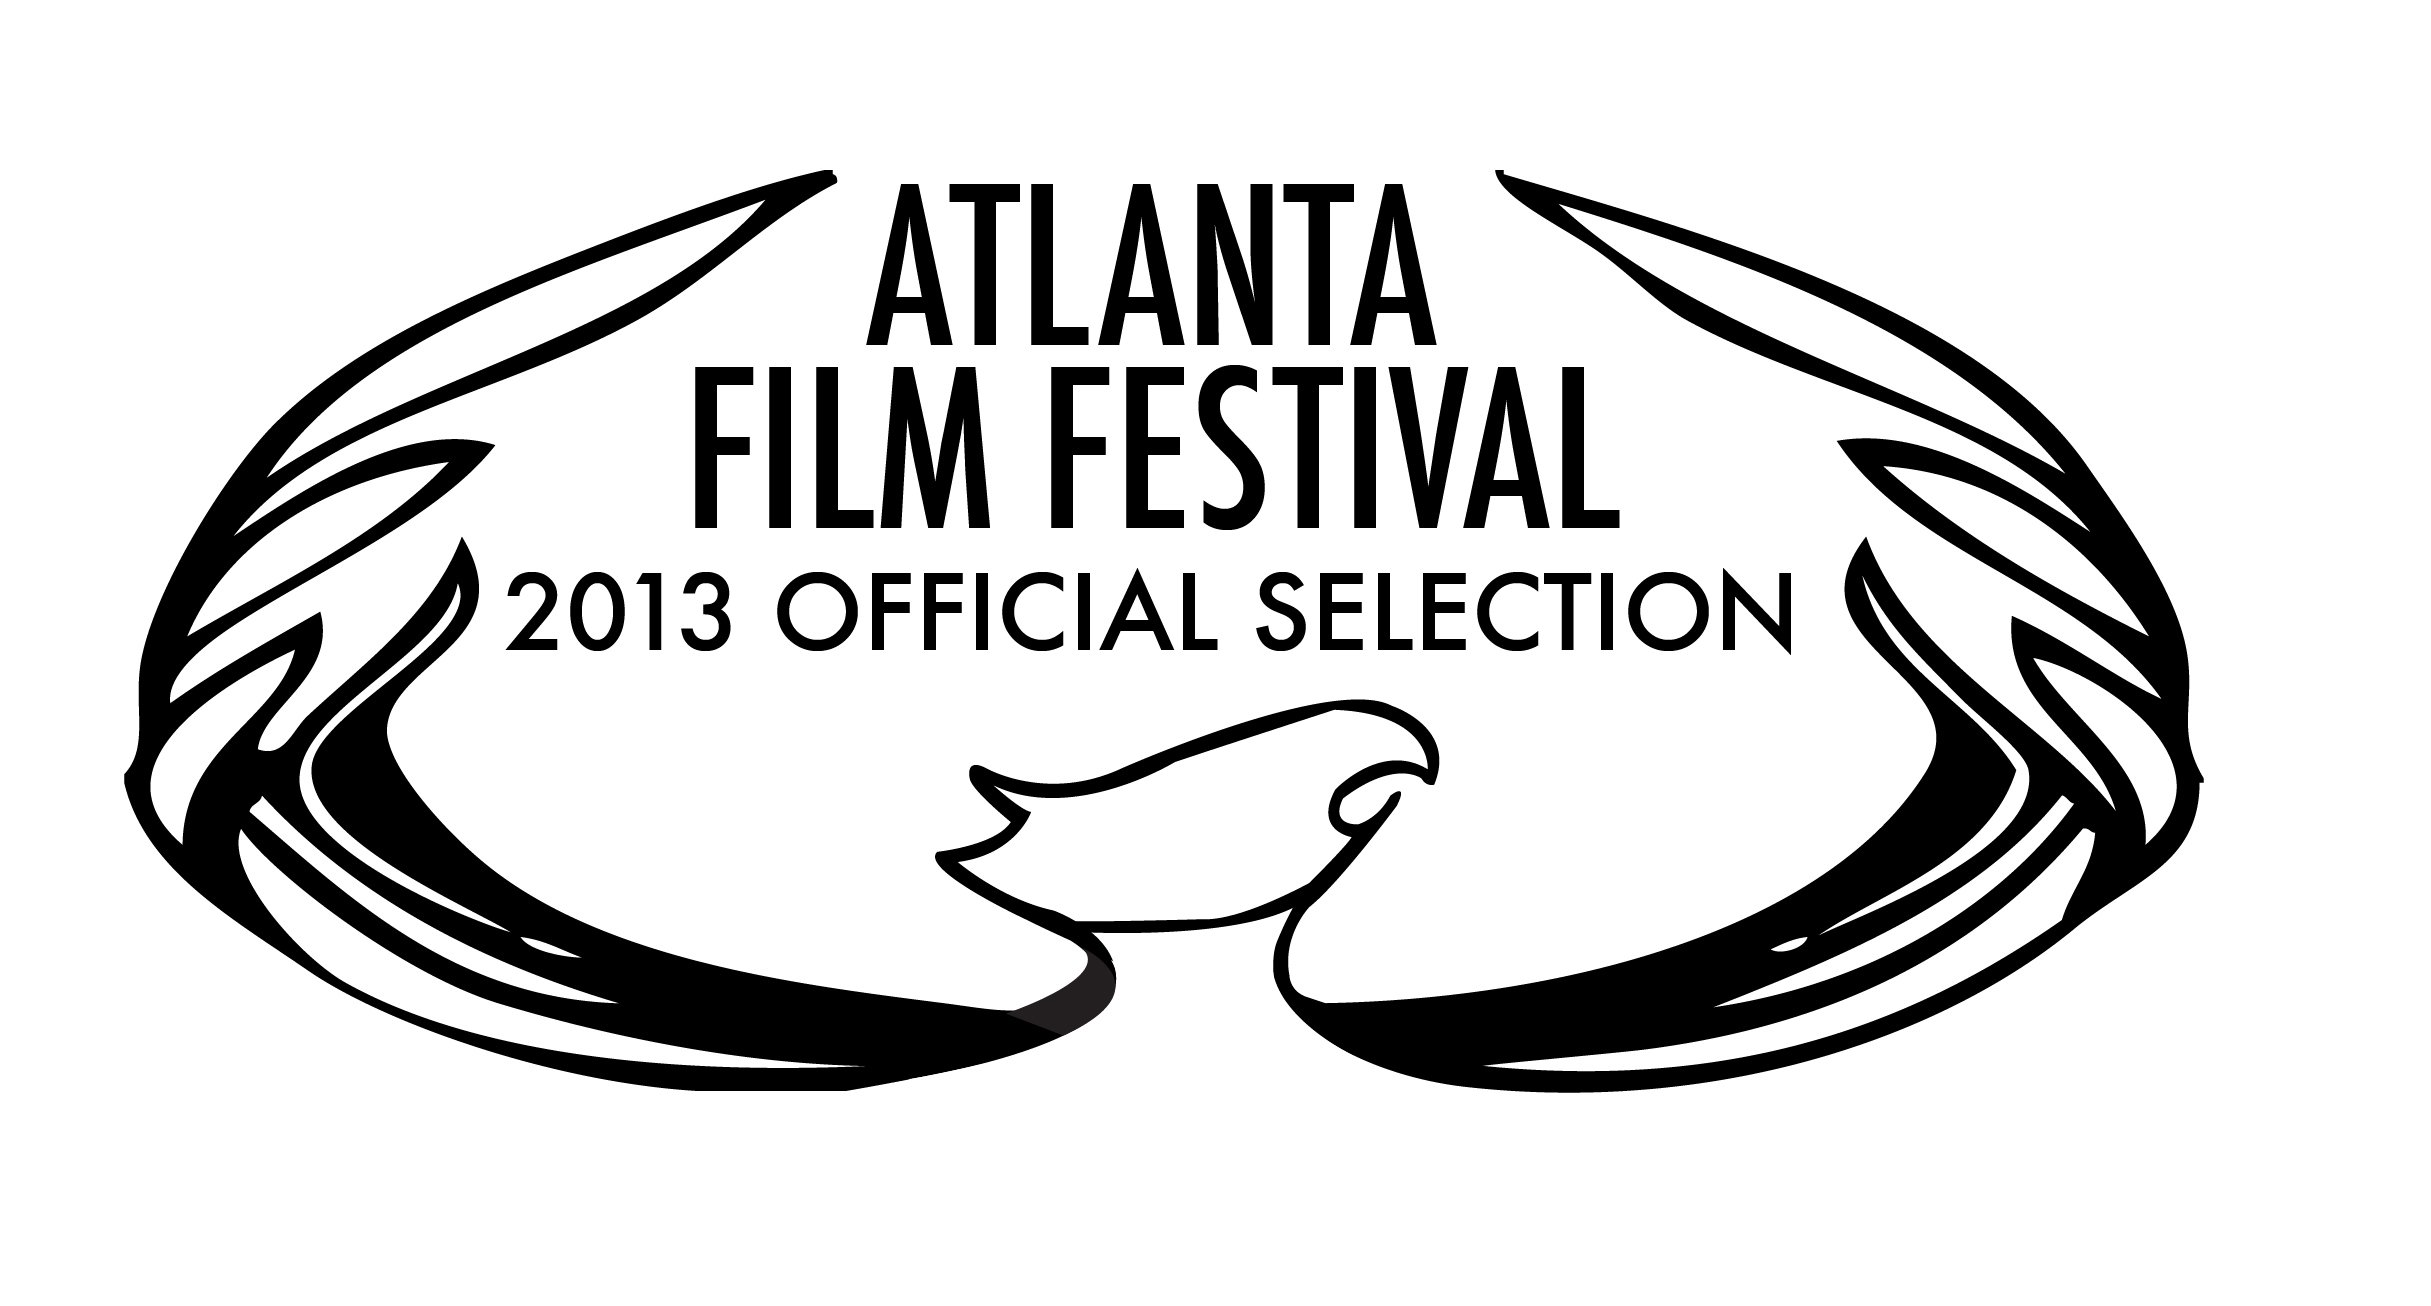 Atlanta-Film-Festival-laurel-2013-official-selection.jpg